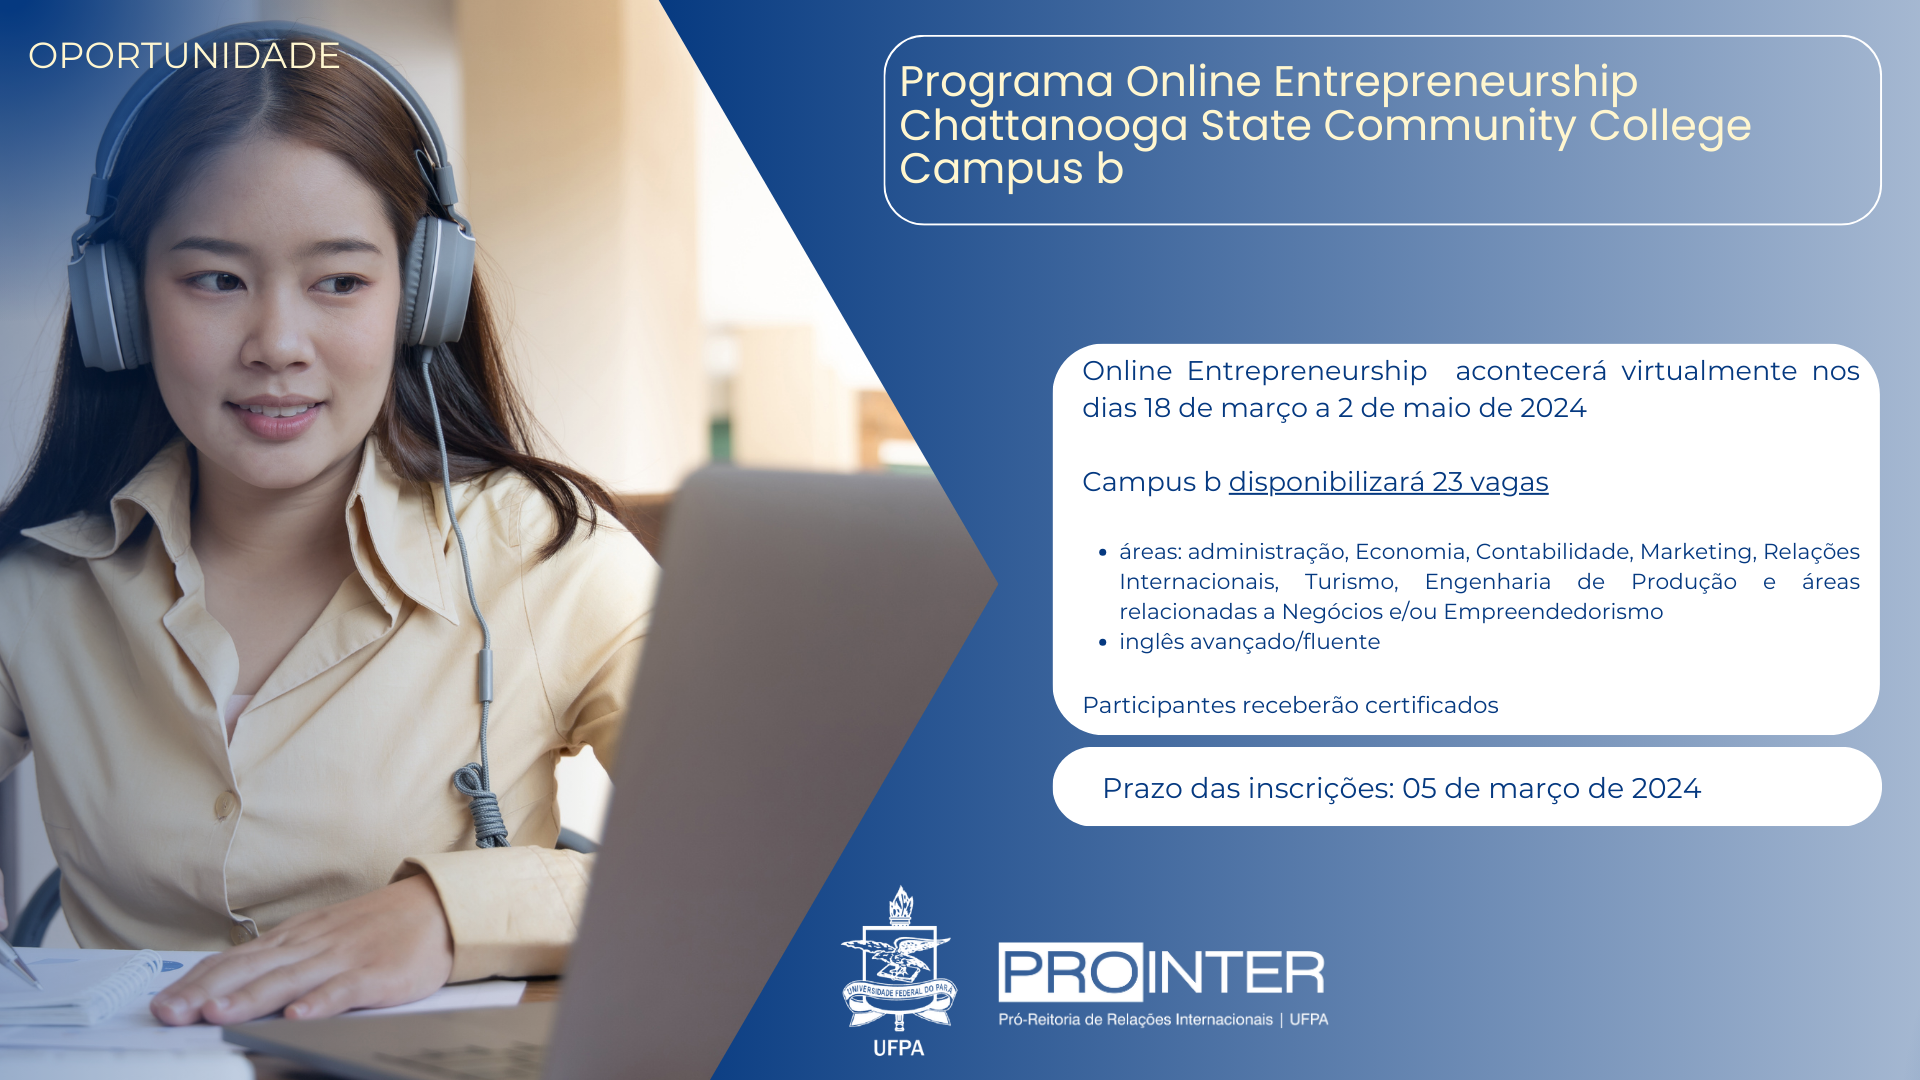 Online Entrepreneurship - Chattanooga State Community College/Campus b